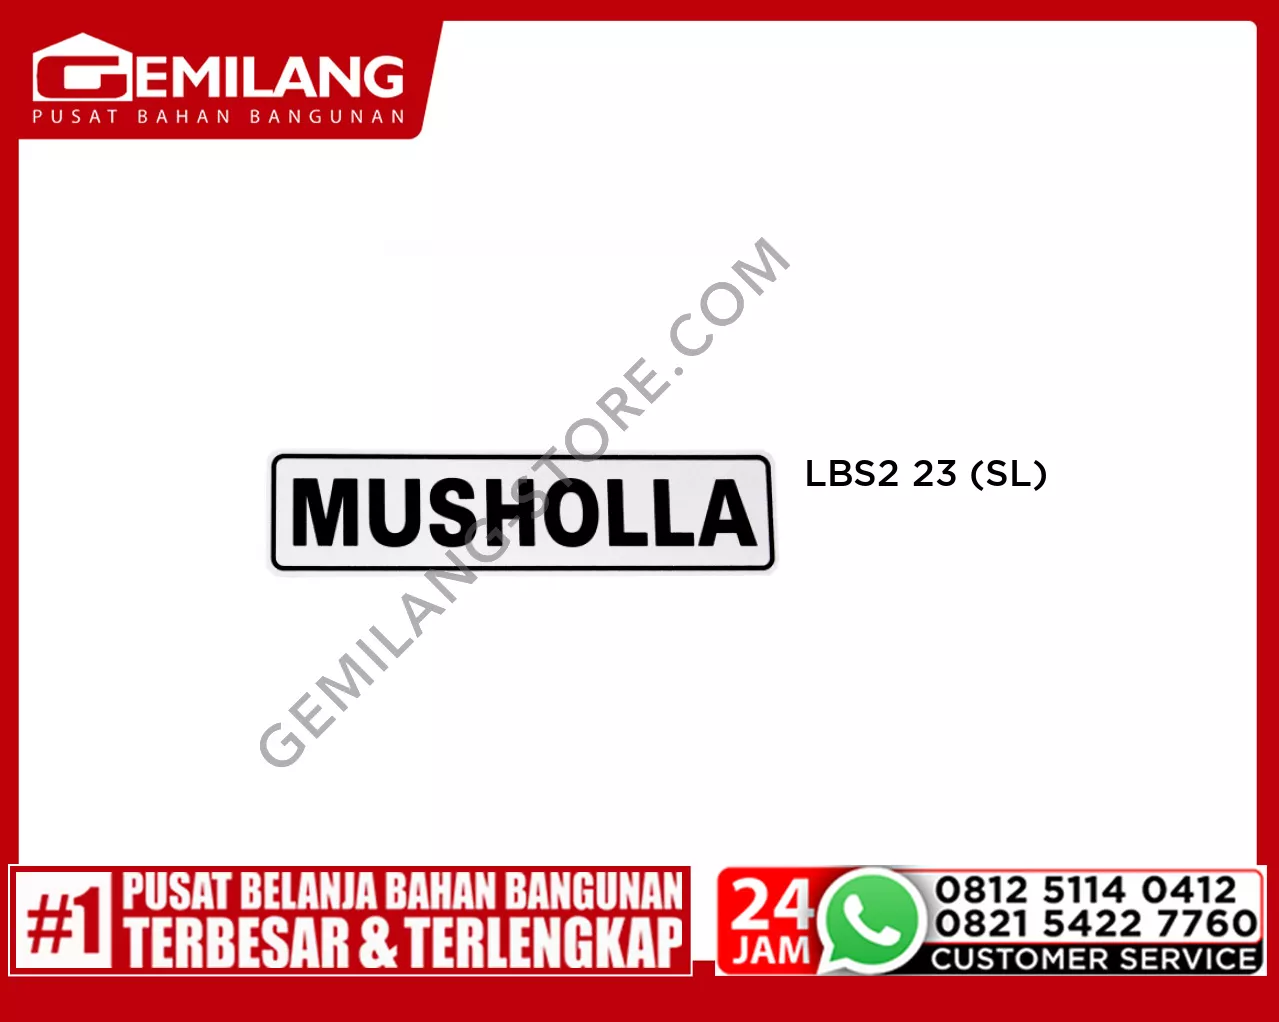 LBS2 23 MUSHOLLA (SL)